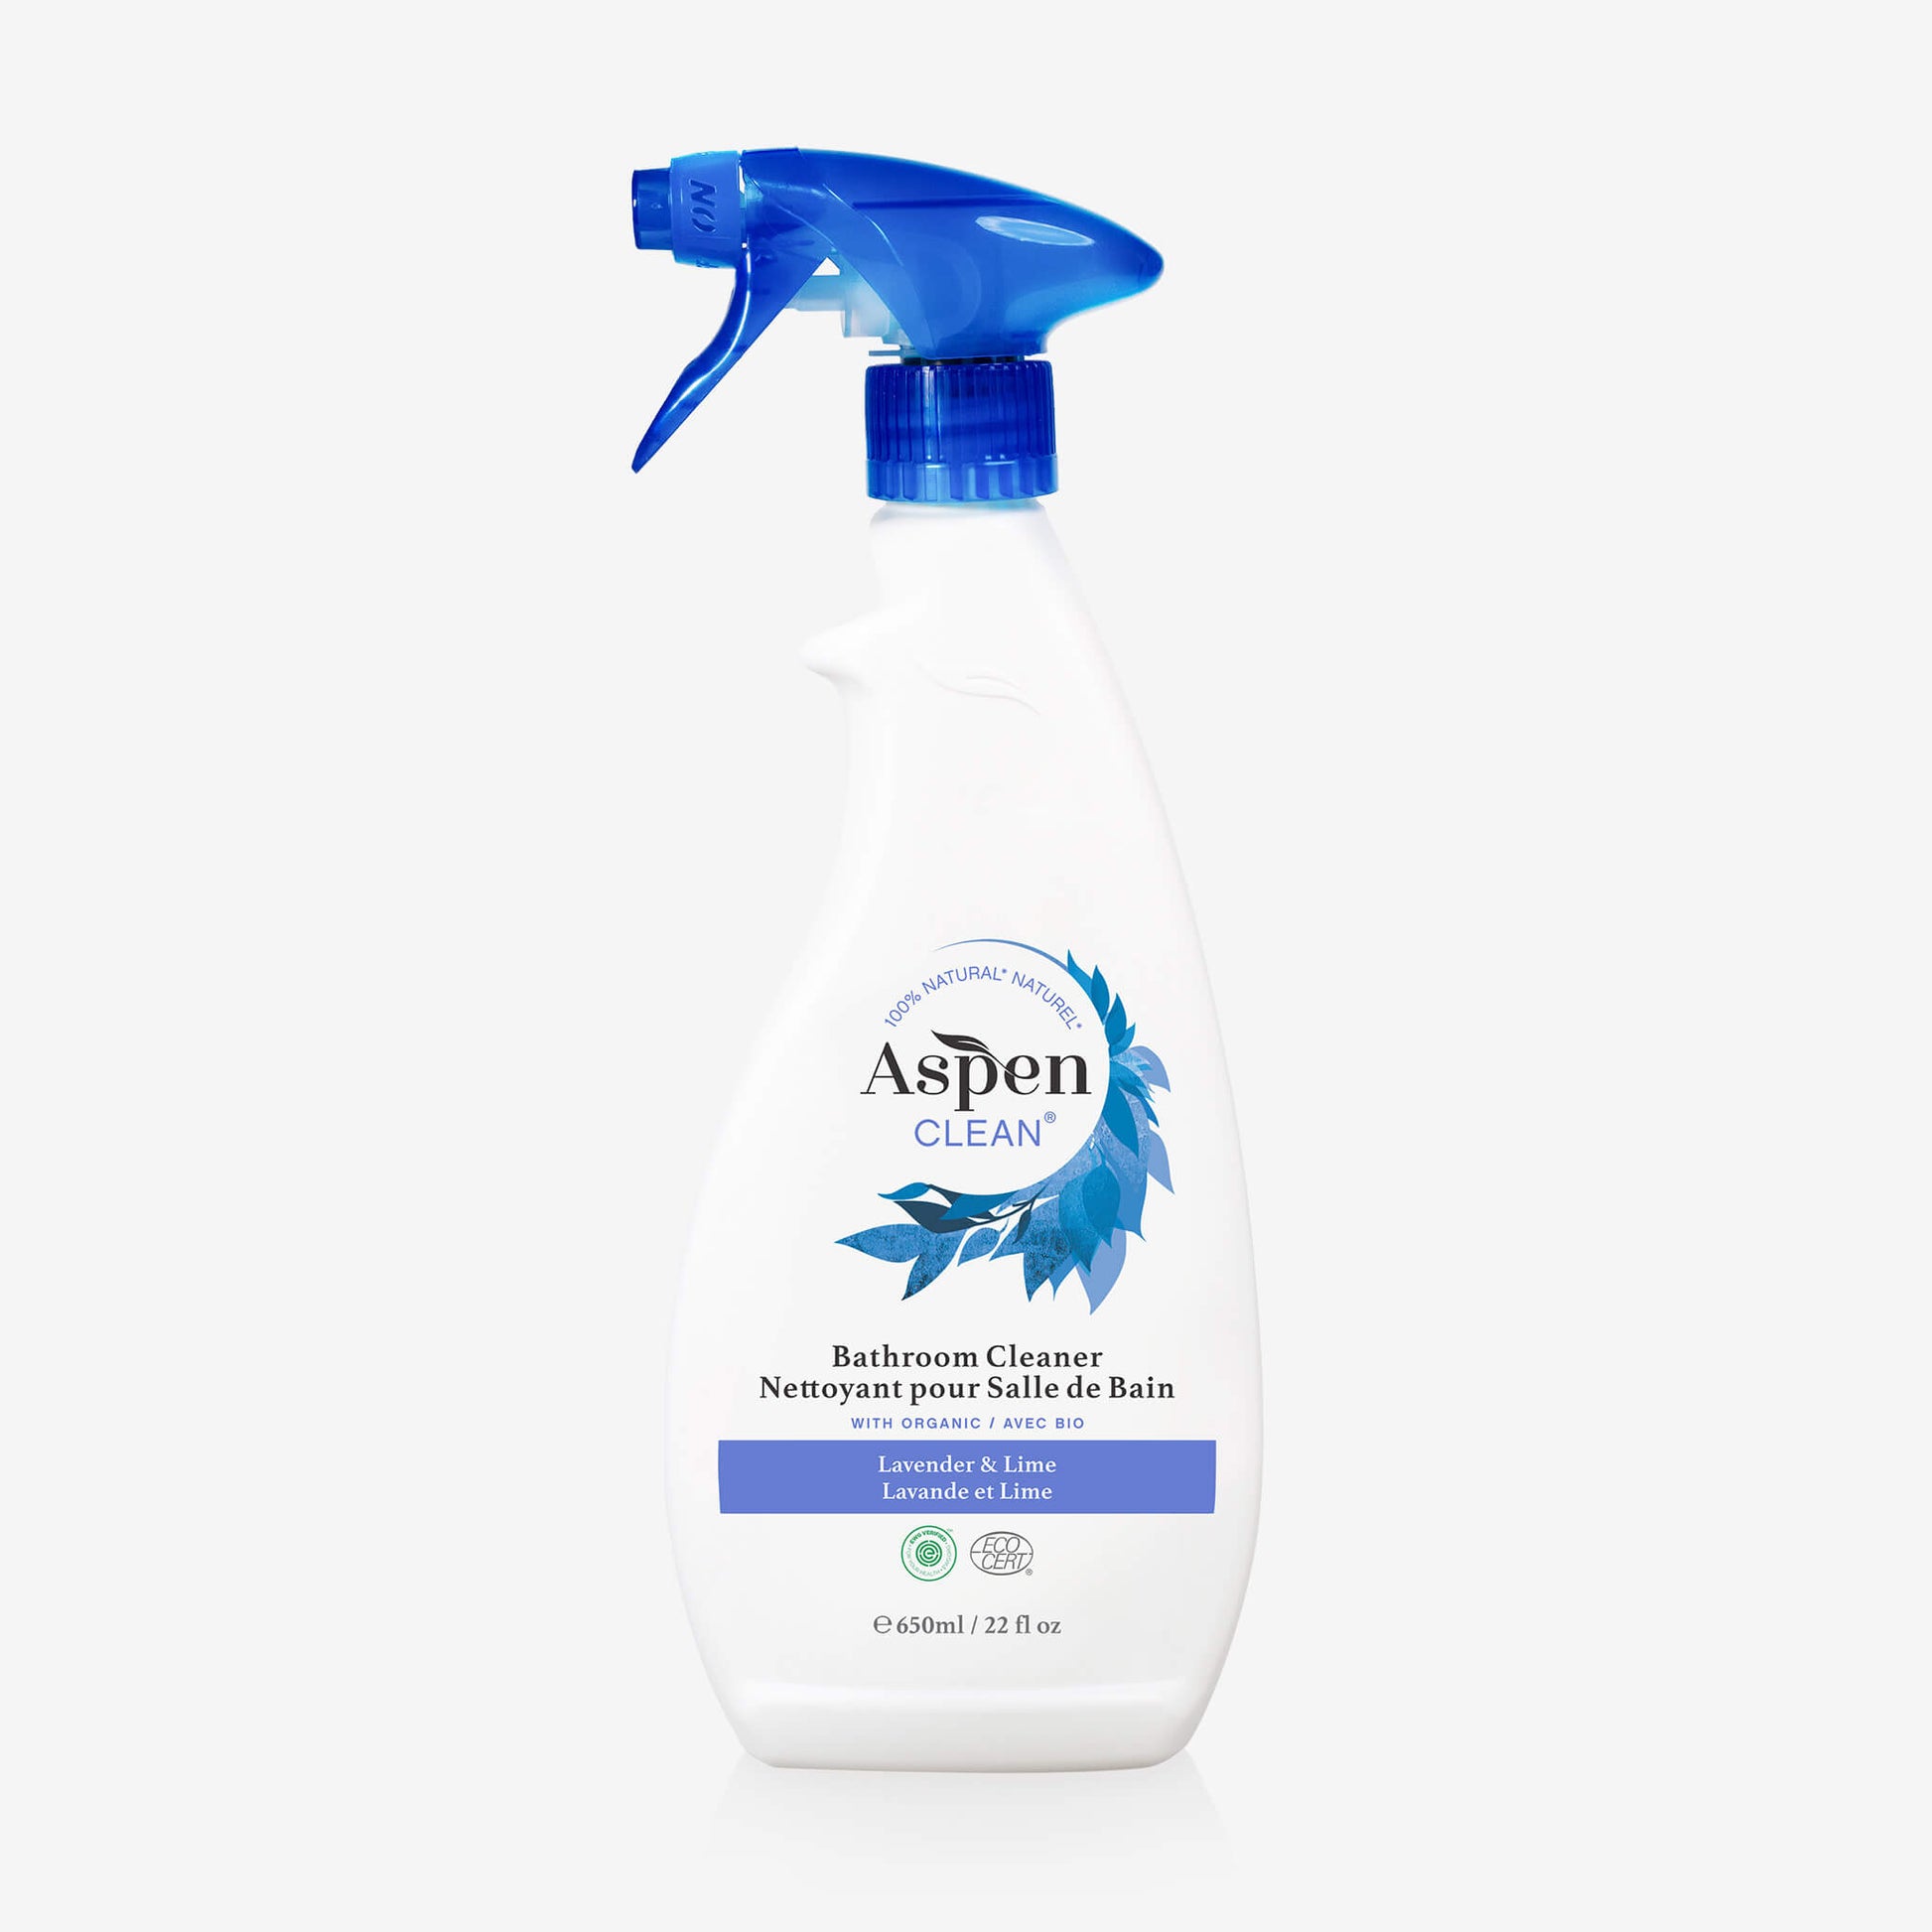 Bio-degradable Safe Dish Soap: Eco Friend & Zero Waste - Safely